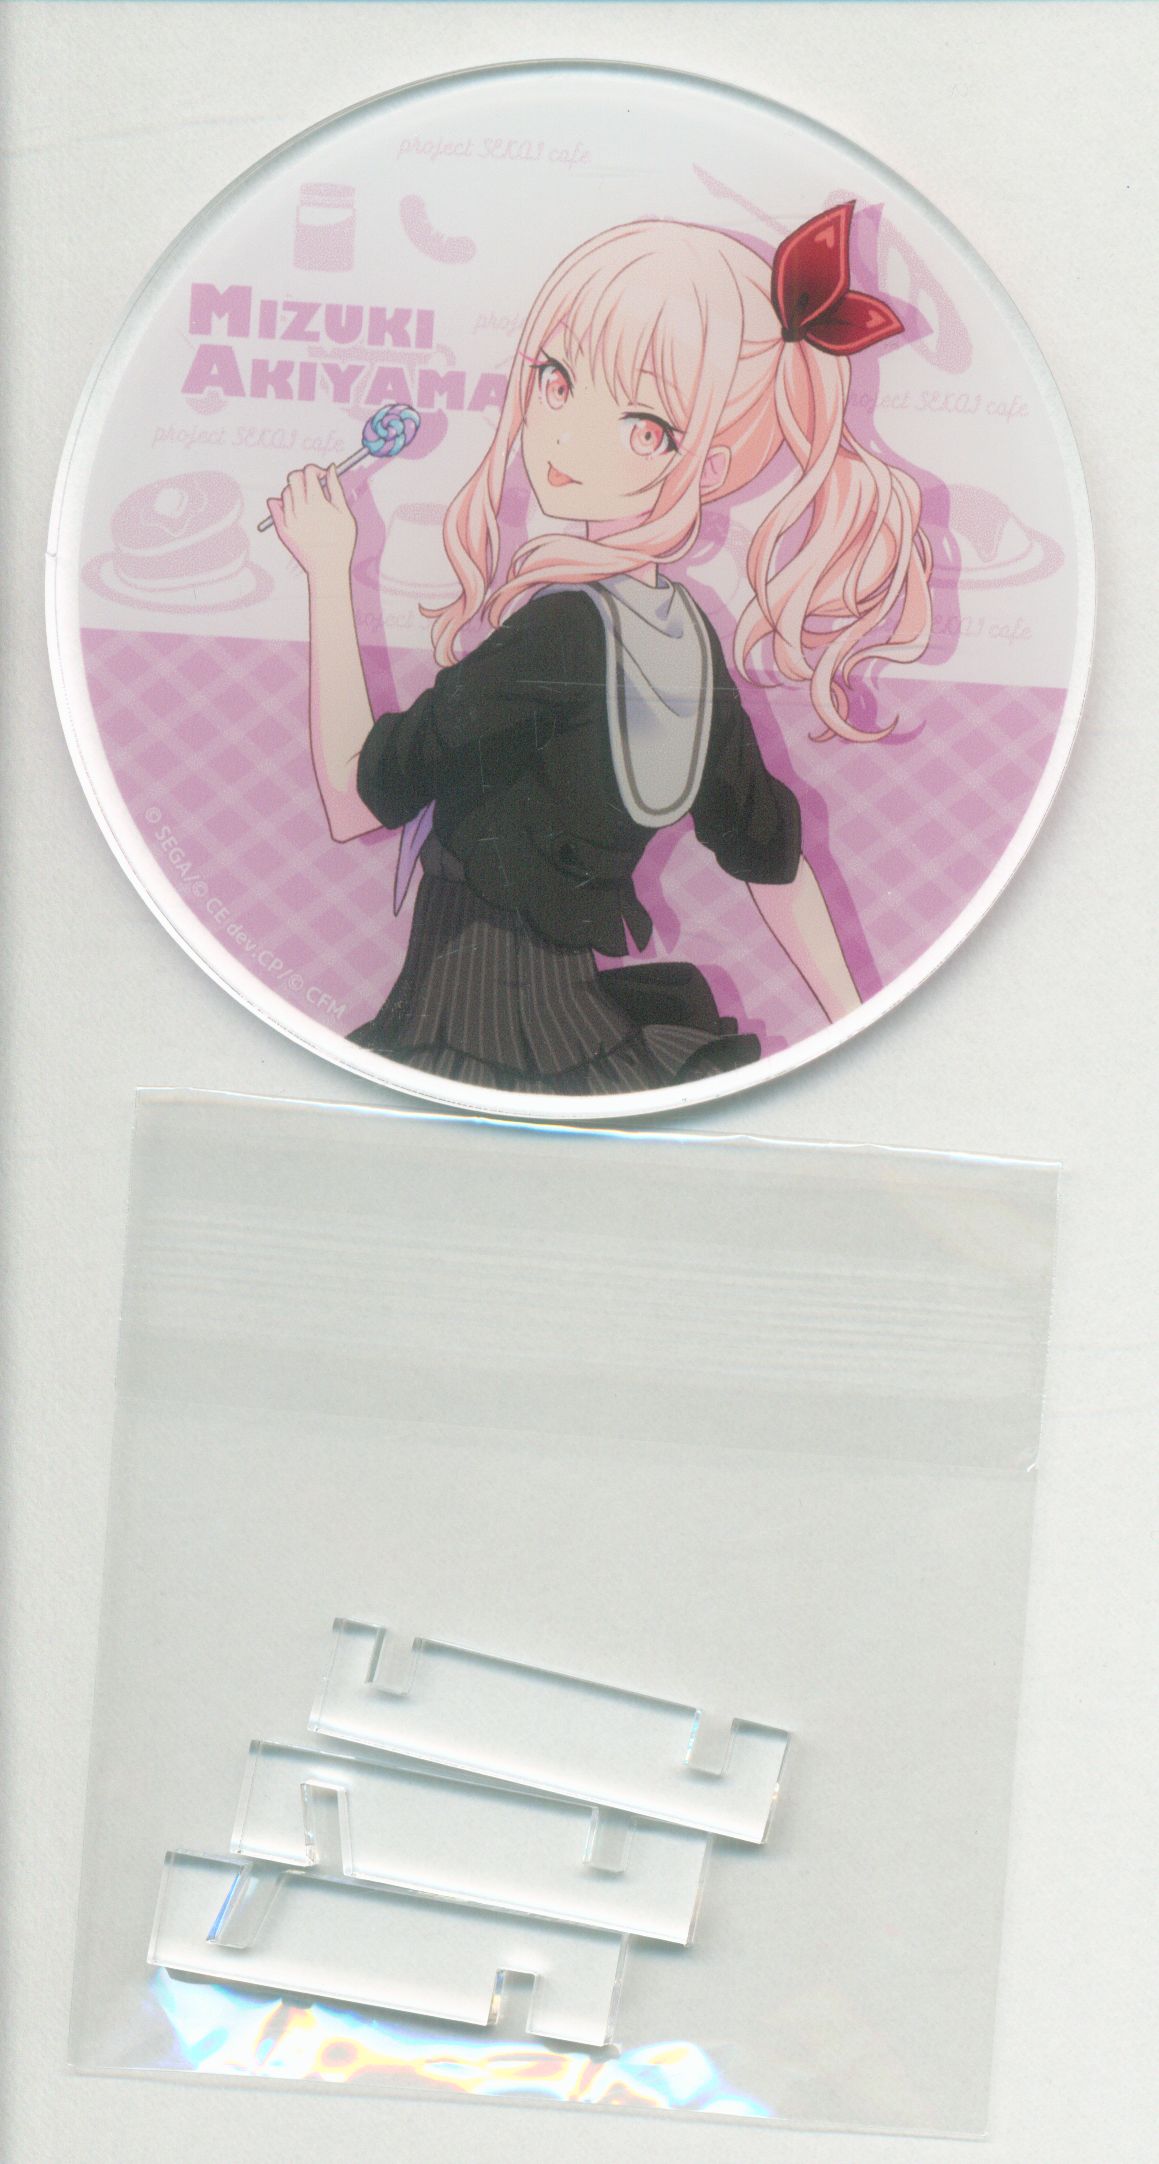 I Rights Llc Acrylic Coaster Stand Purosekakafe In Animax Cafe Akatsukisan Mizuki Vol 2 Mandarake Online Shop